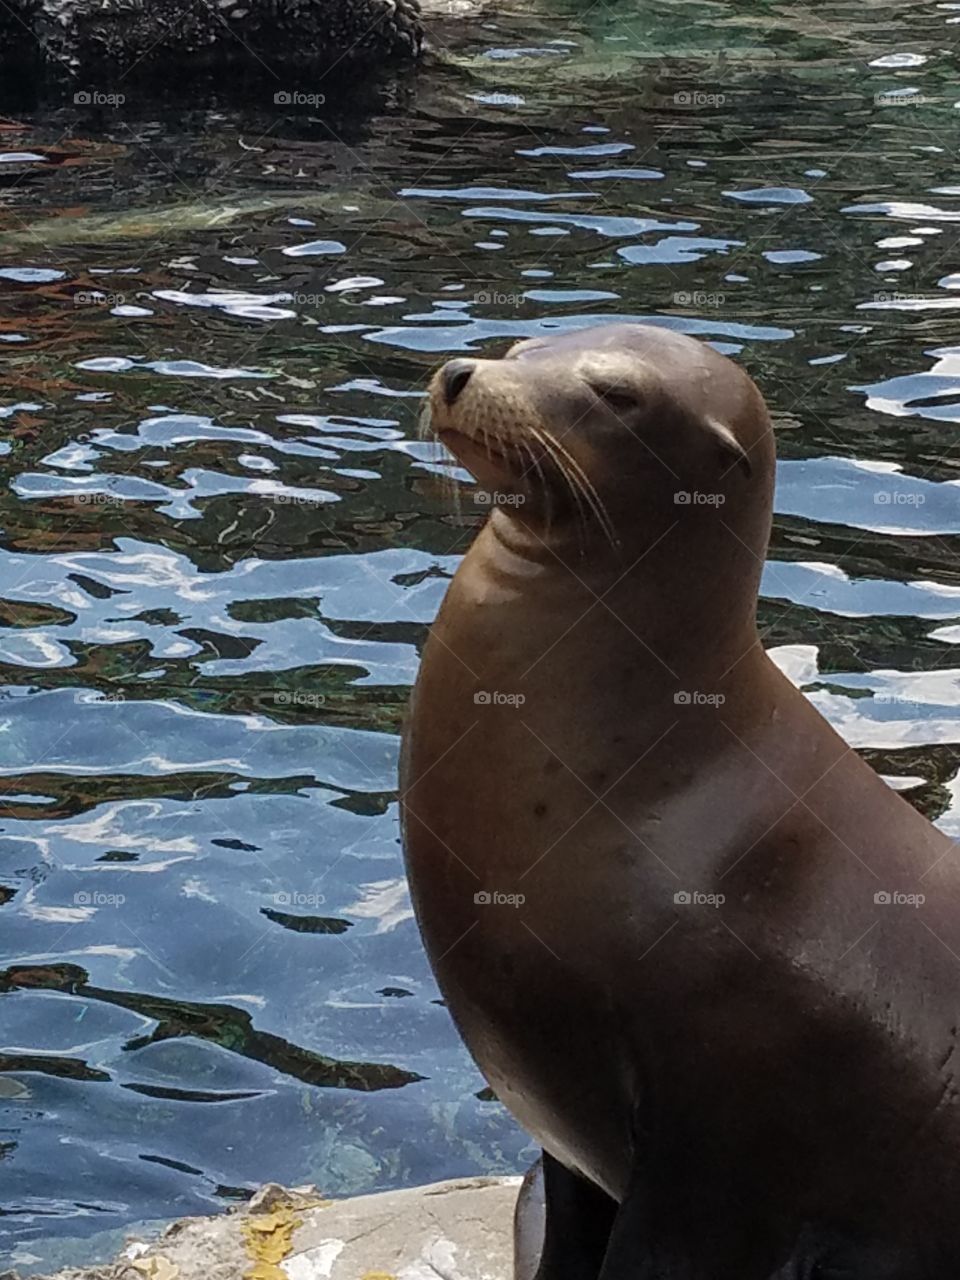 A friendly seal.